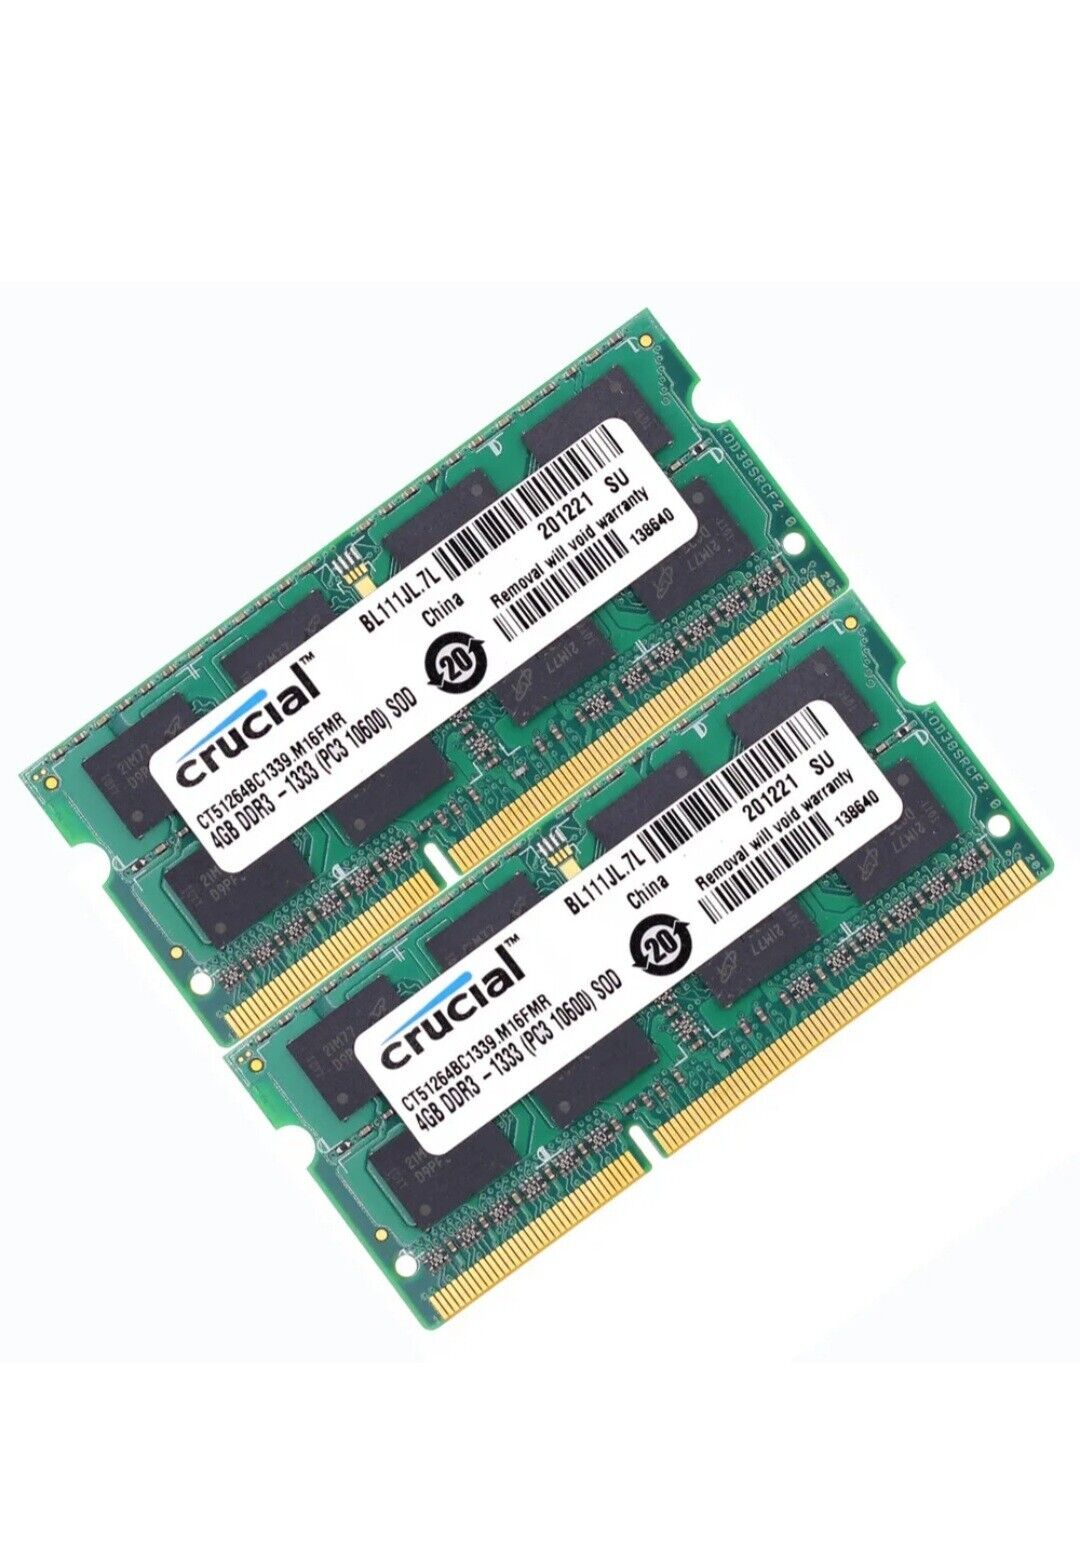 8GB Kit 2x4GB PC3-10600S DDR3 1333MHz 204-pin SO-DIMM Memory Laptop RAM, Various